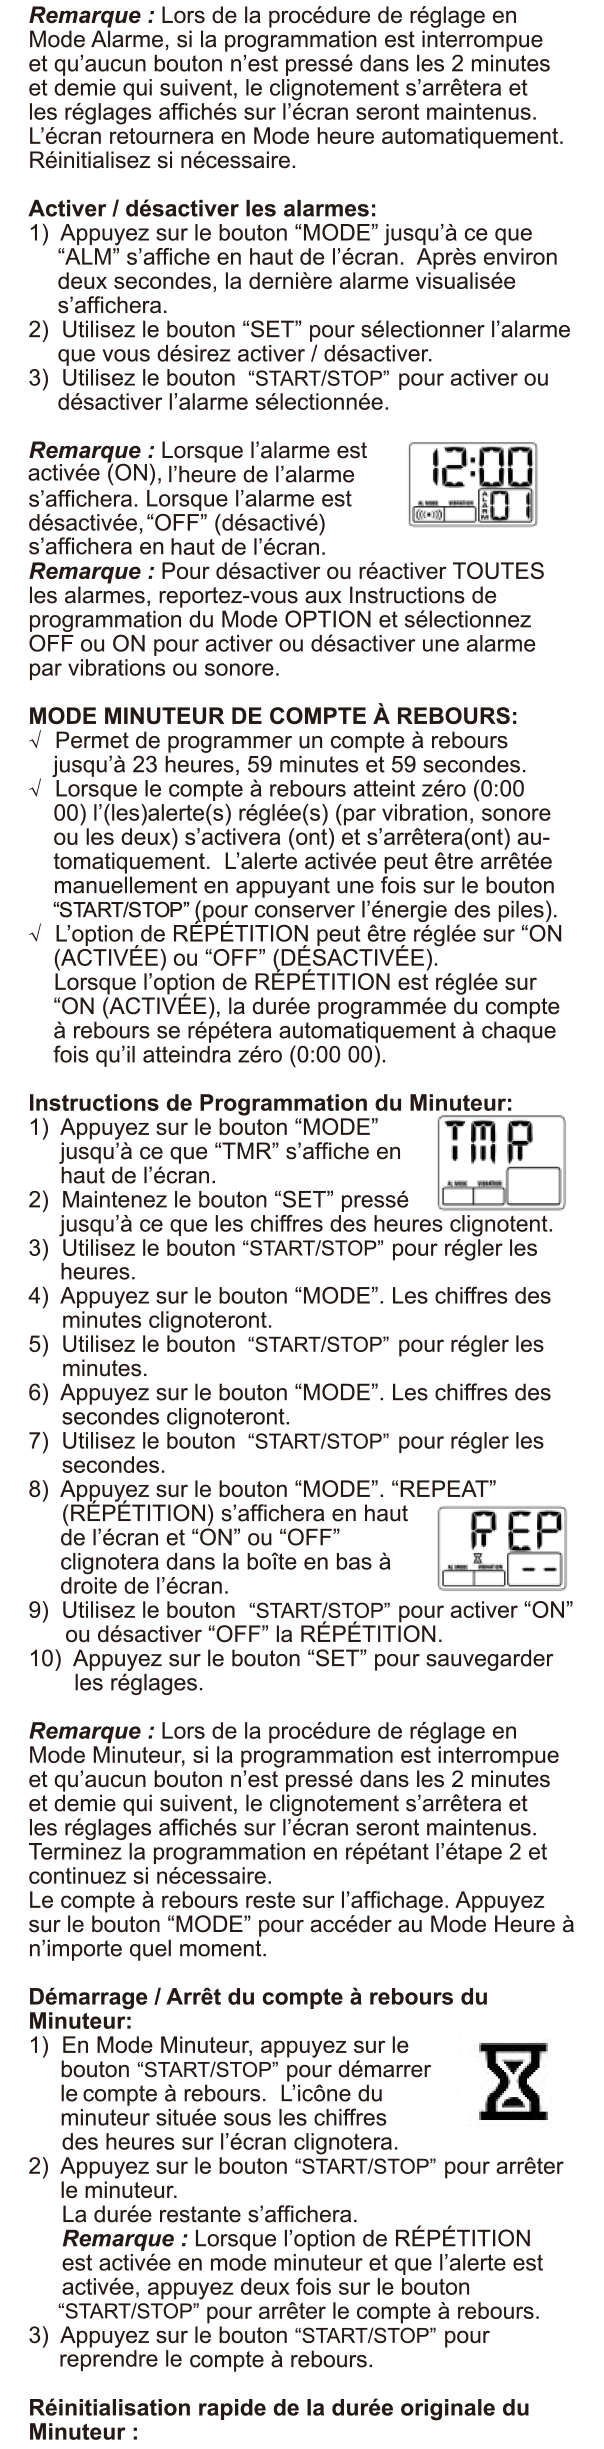 vibralite-mini-french-instruction-manual-page-3